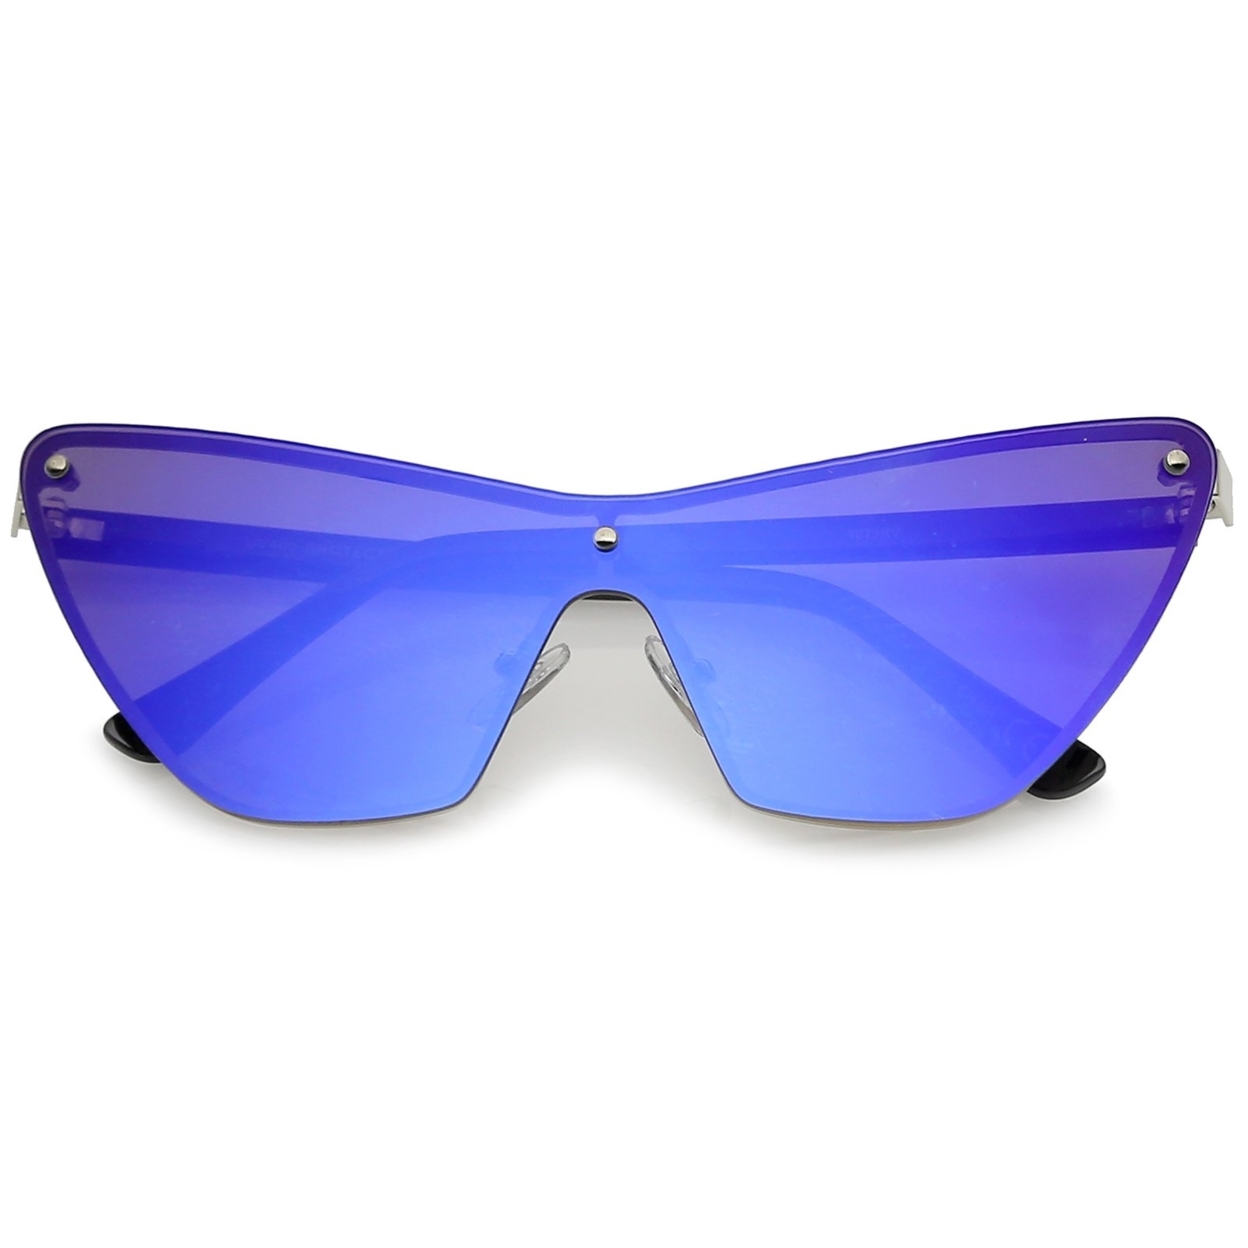 Oversize Rimless Colored Mirror Mono Lens Shield Cat Eye Sunglasses 68mm - Silver Black / Blue Mirror